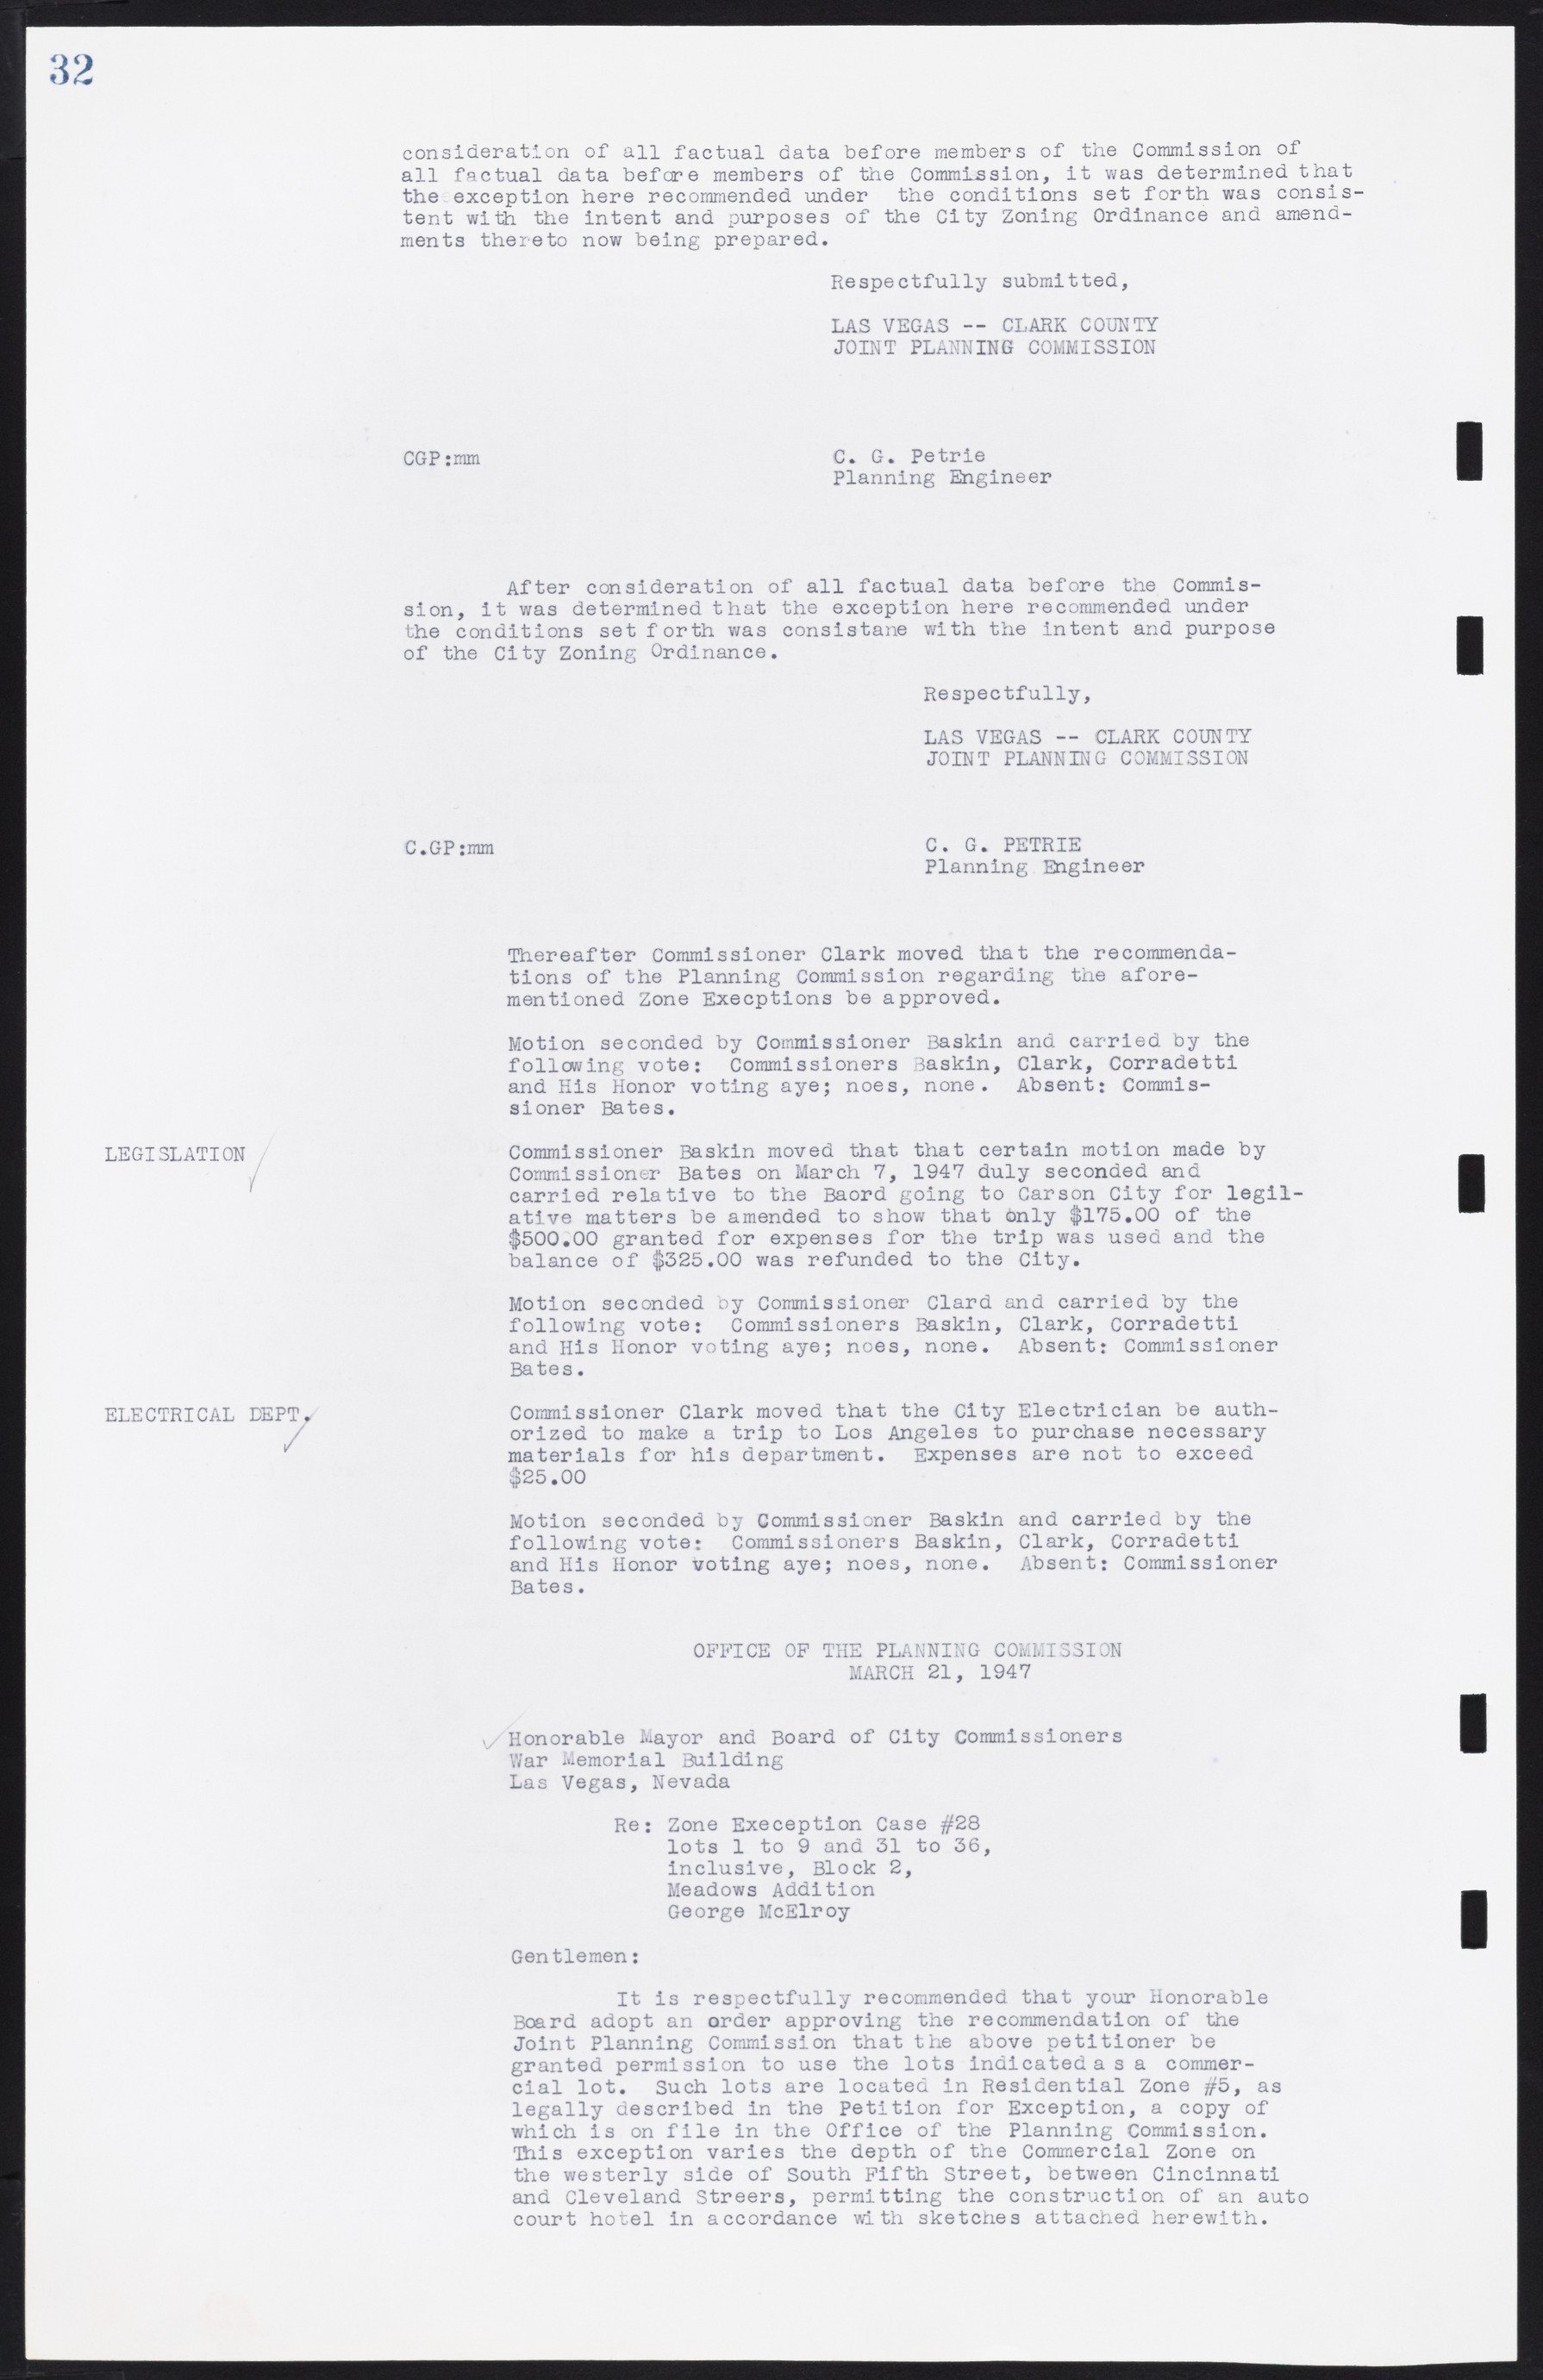 Las Vegas City Commission Minutes, January 7, 1947 to October 26, 1949, lvc000006-47